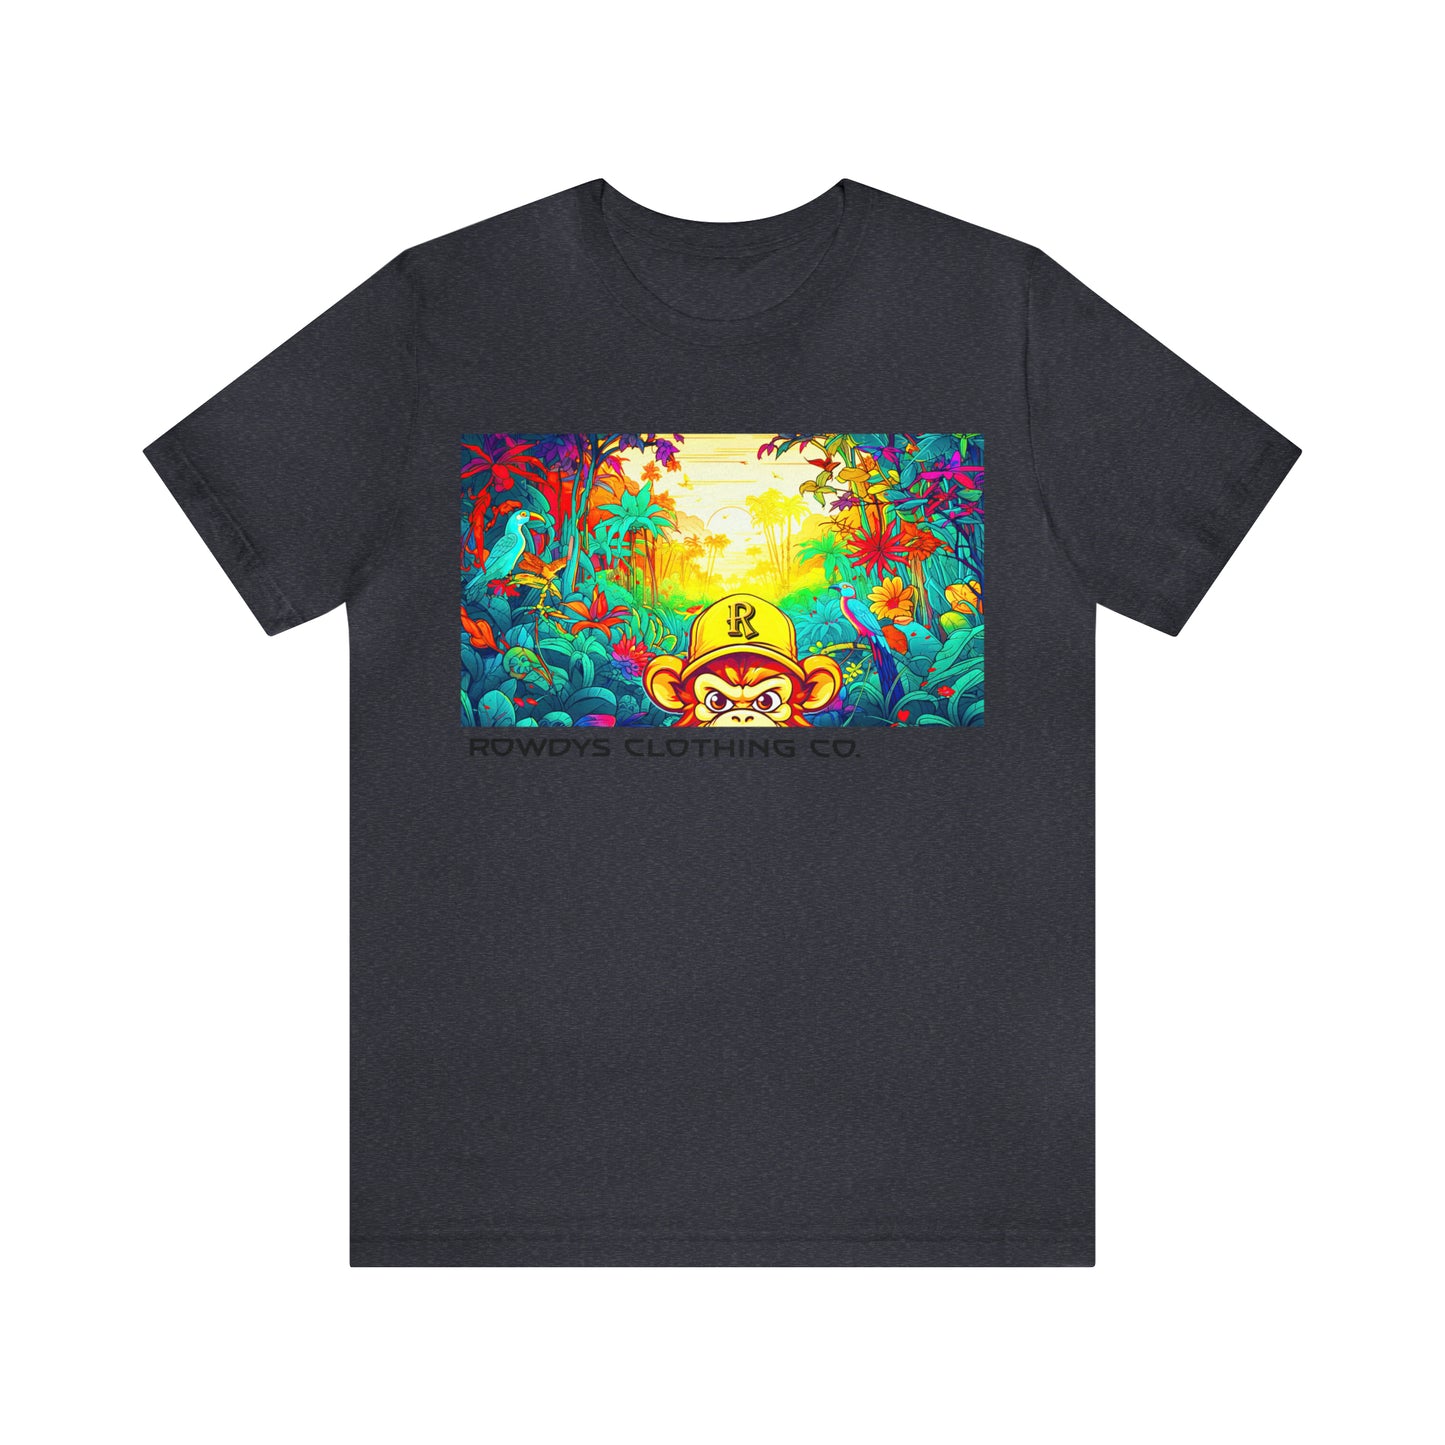 Rowdy's Clothing Co. Monkey T-shirt - Original Rowdy's Brand T-Shirt